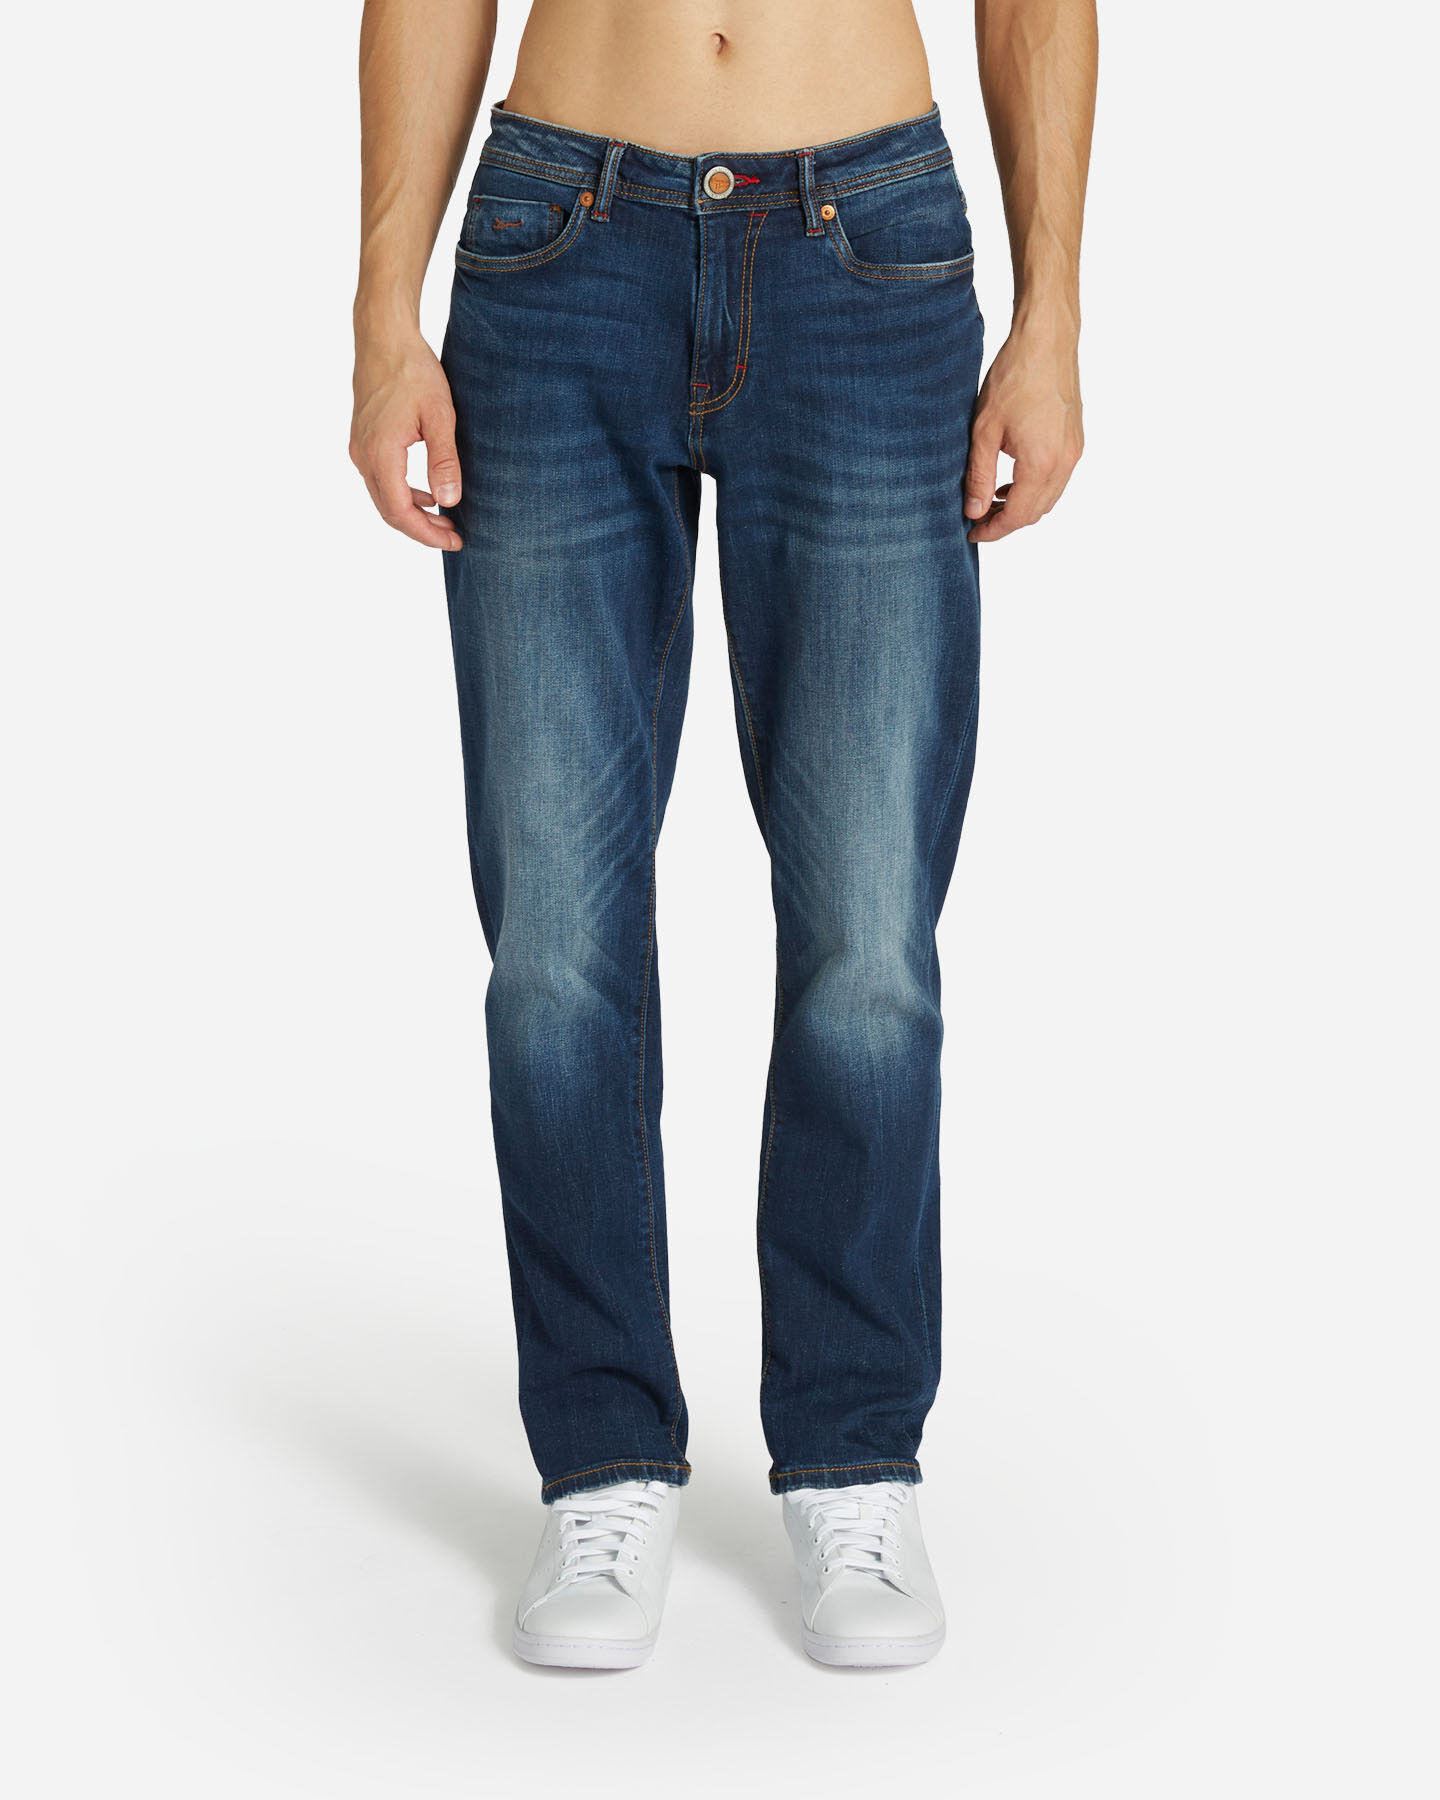  Jeans COTTON BELT 5 POCKET M S4126997|DD|40 scatto 0